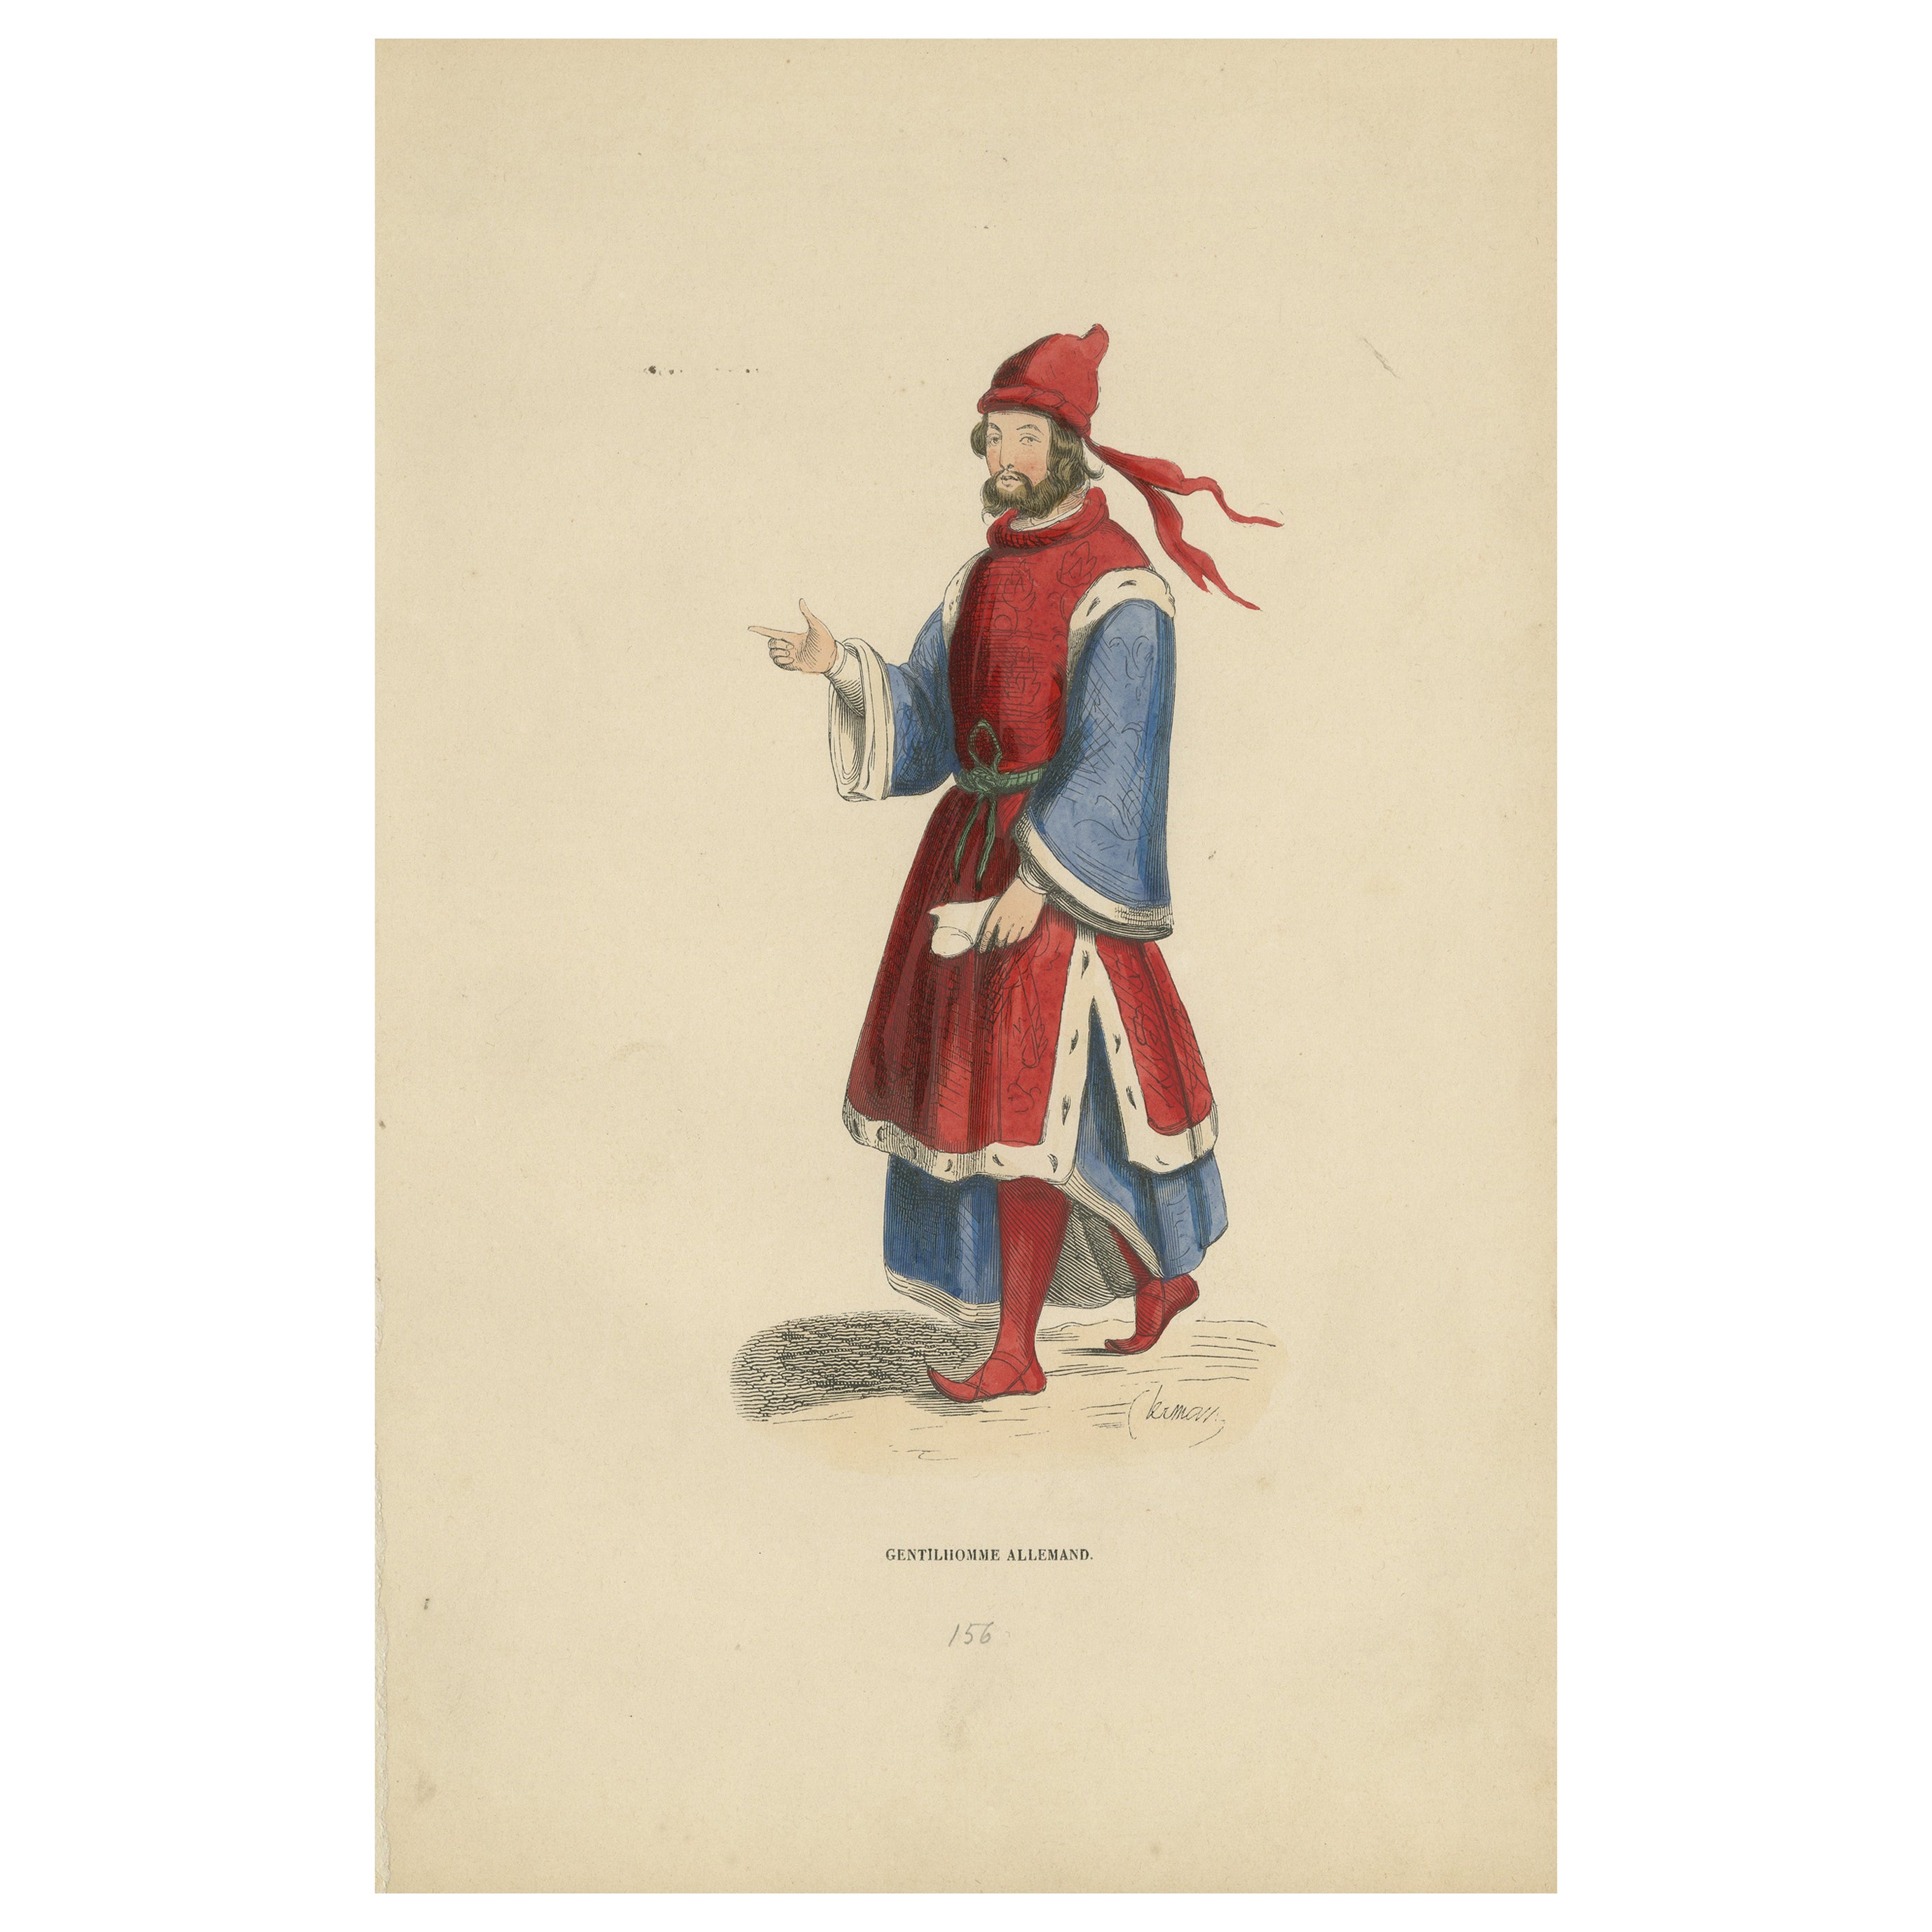 Noble Bearing: A German Gentleman in Medieval Attire, 1847